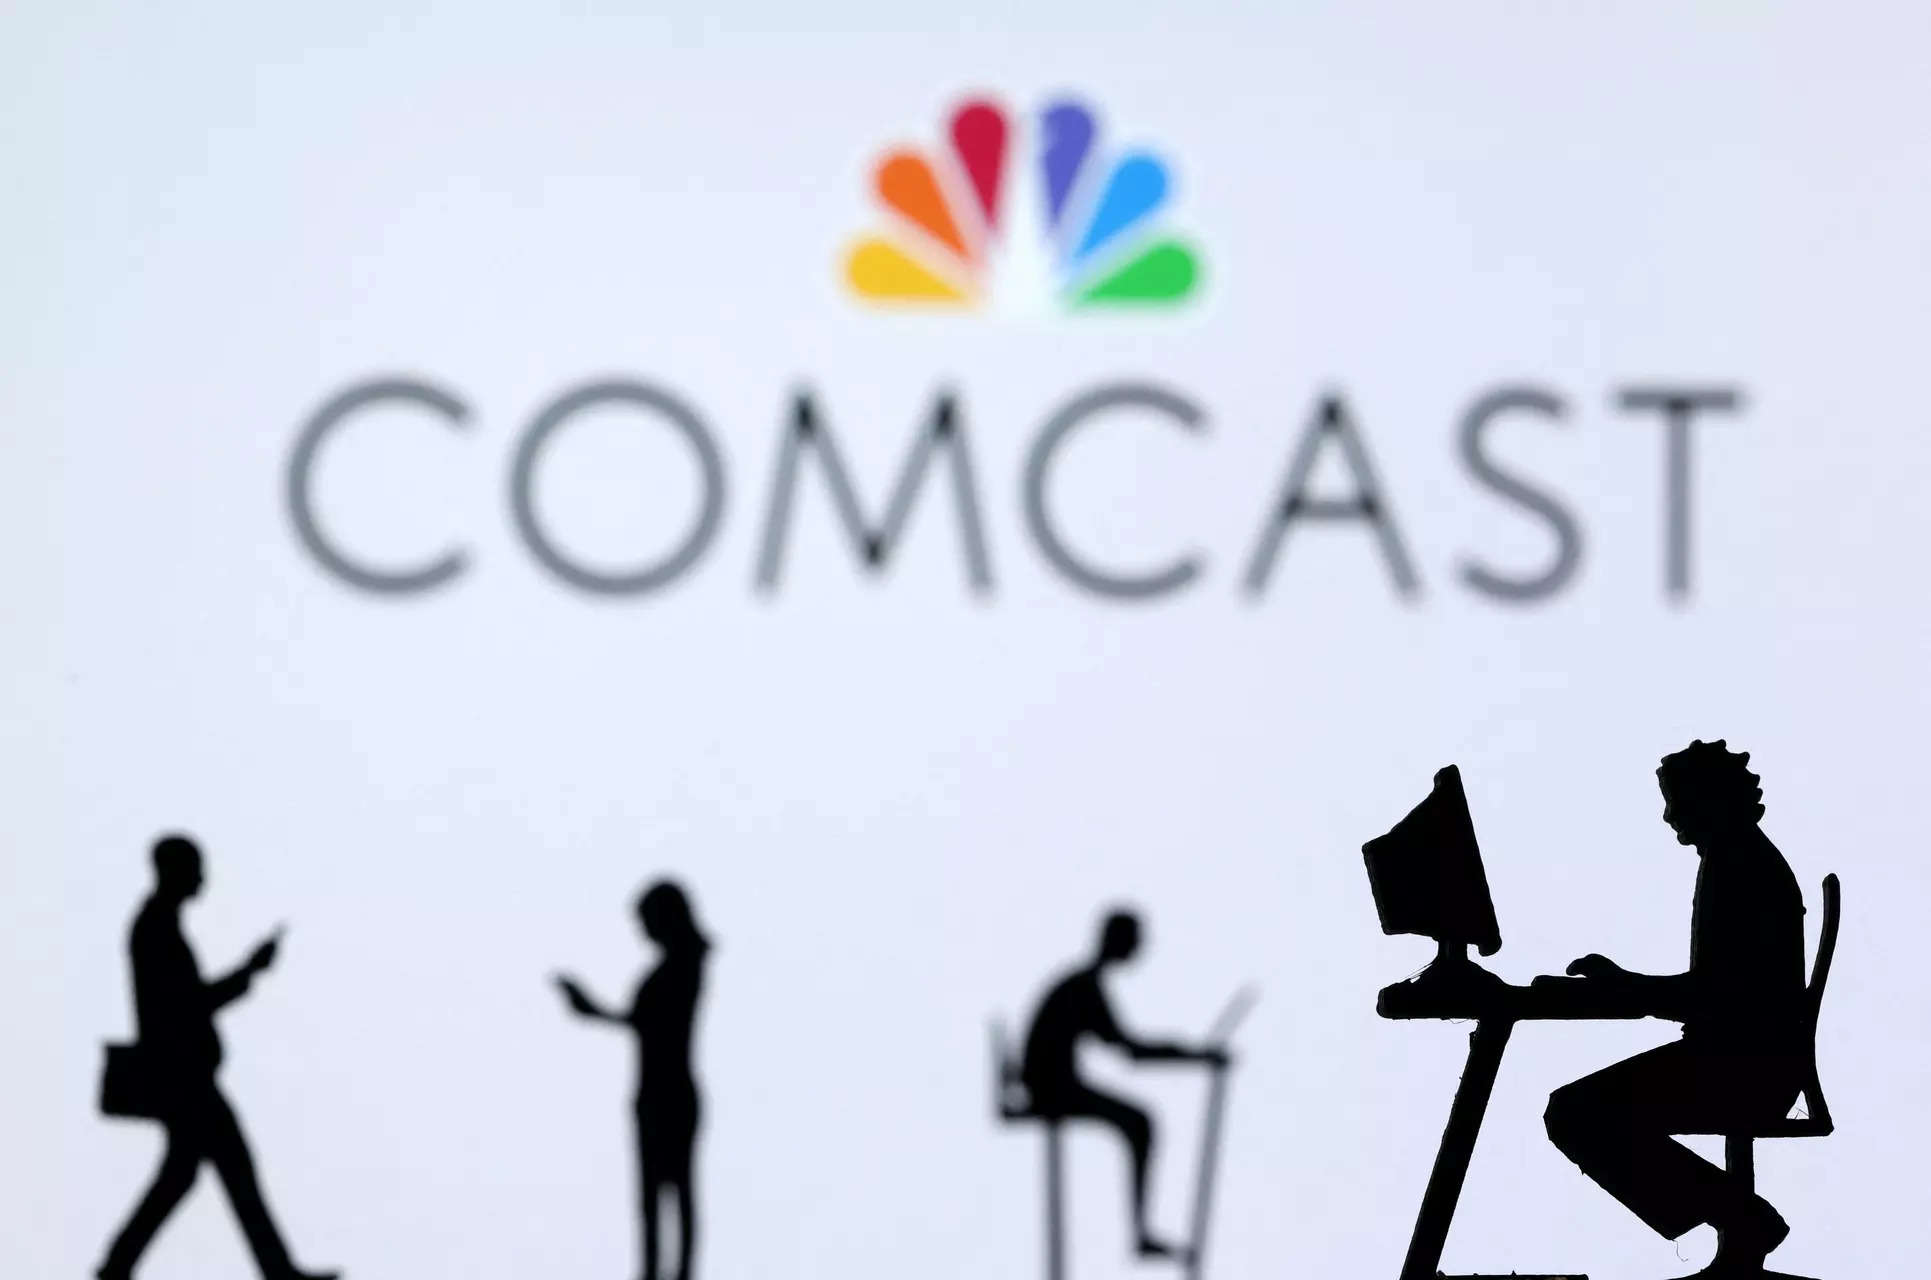 Comcast beats estimates on broadband, theme park strength, Telecom News